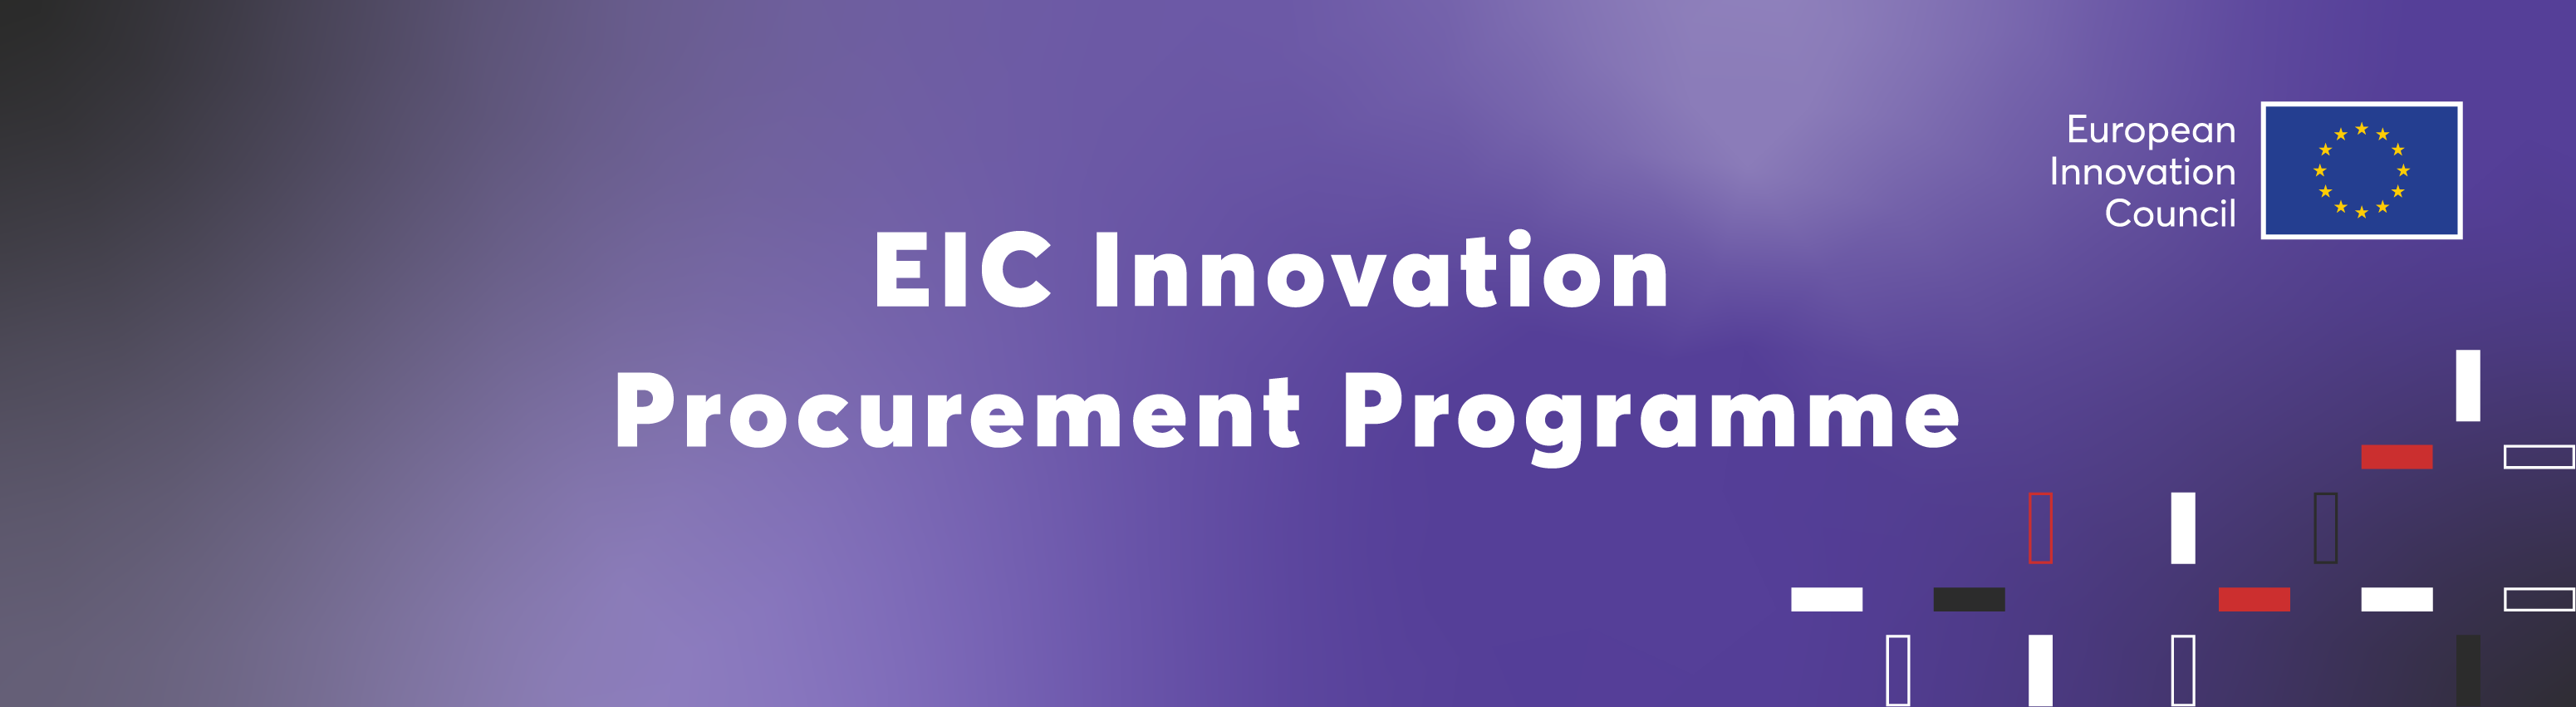 EIC Innovation Procurement Programme